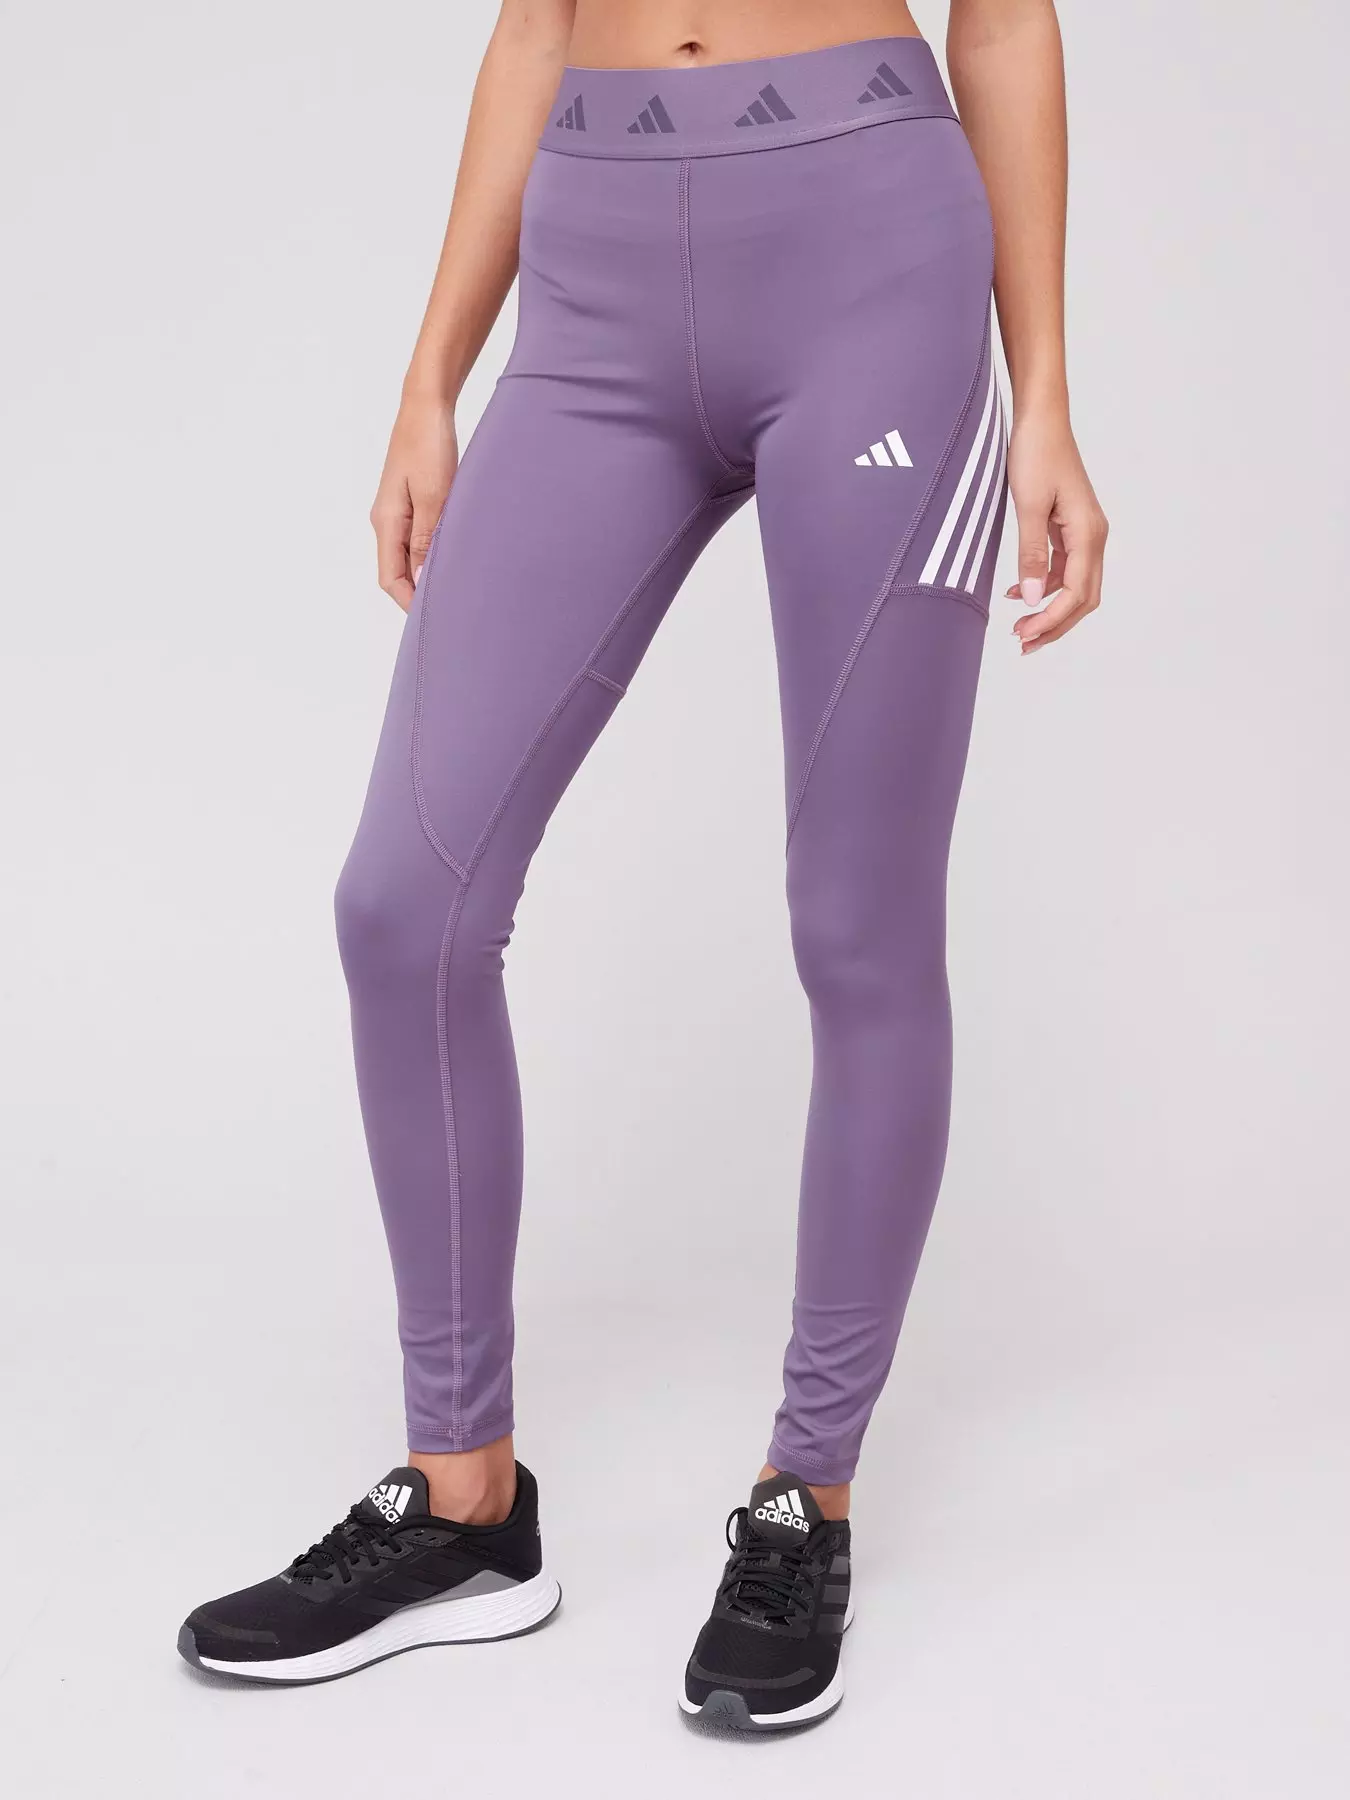 Adidas | sports | Womens & Tights clothing Sports | leisure leggings 